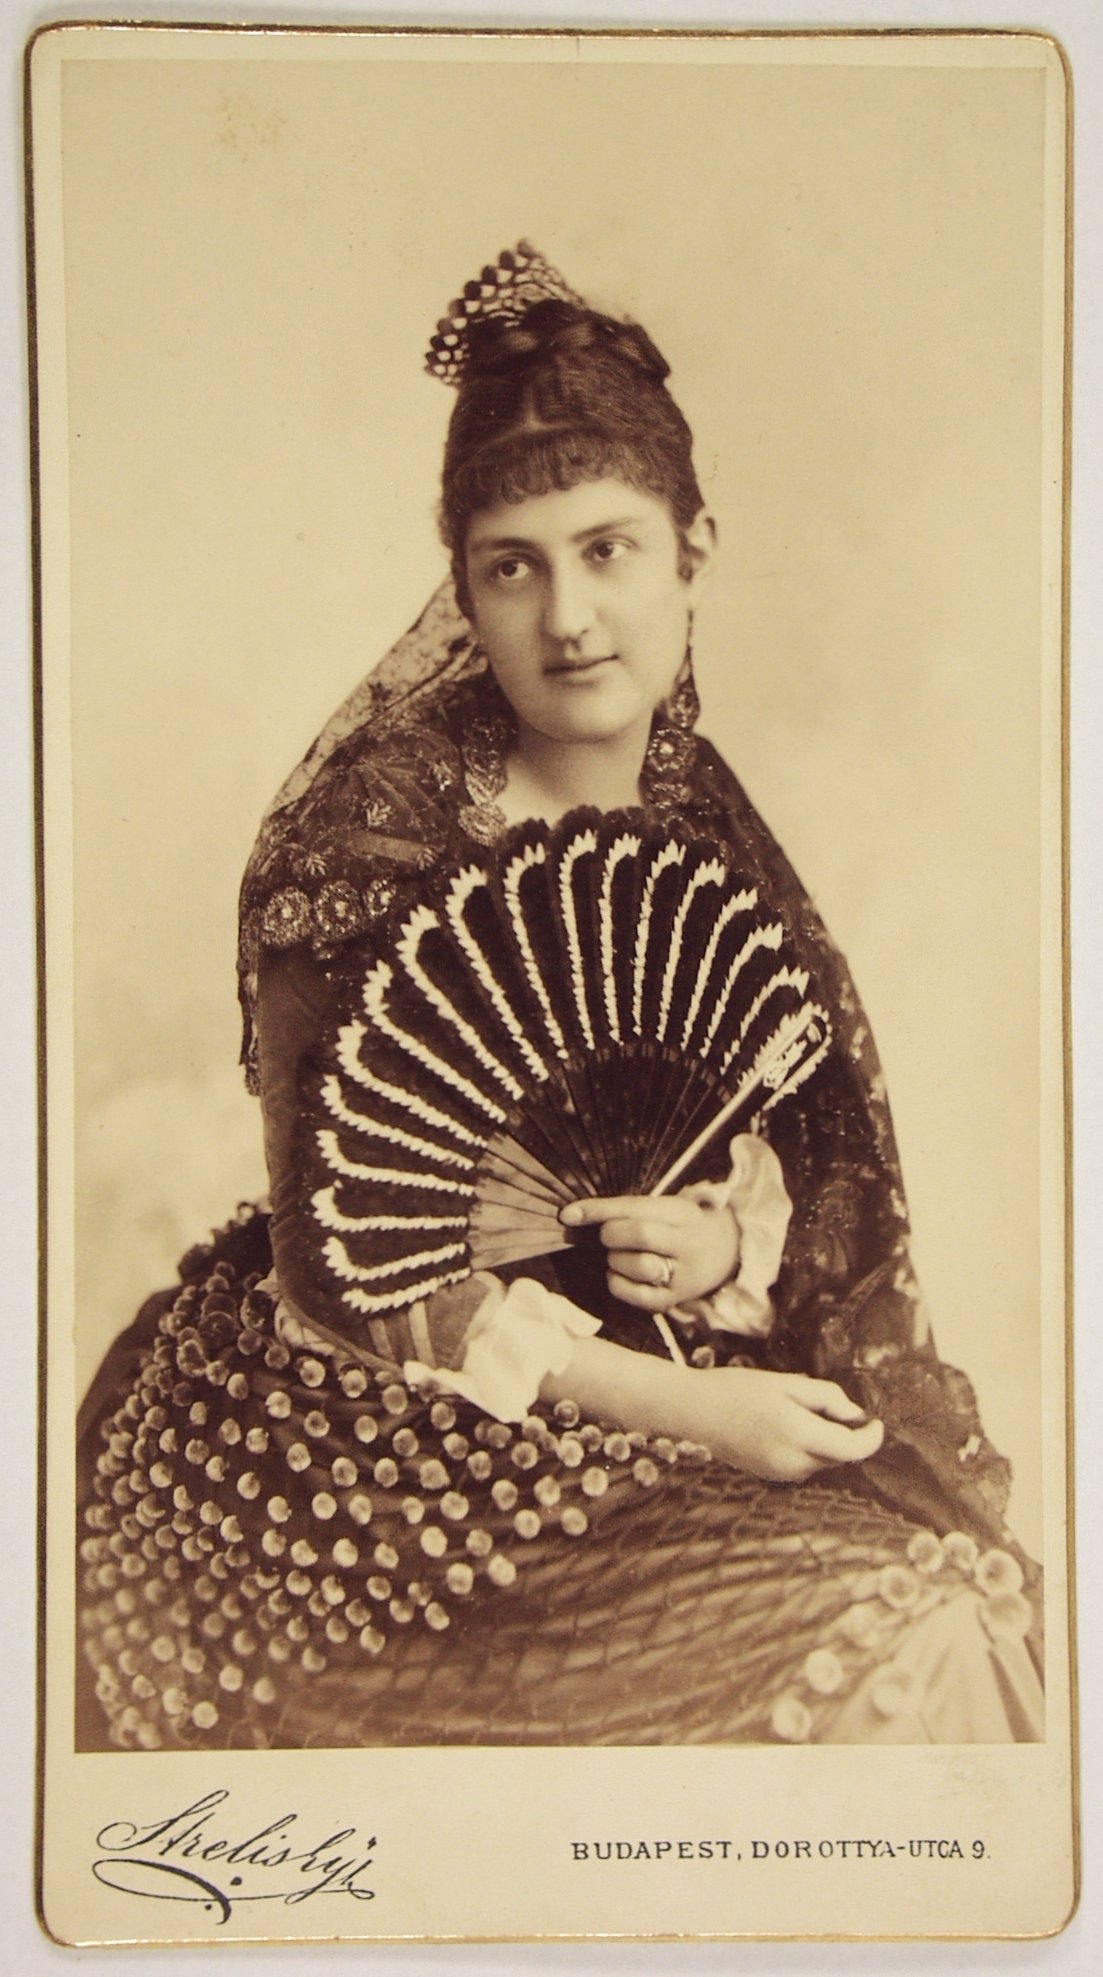  National Archives of Hungary, Festetics family archives, József Görgey, Klára Lipthay as a Sevillian woman, 1885